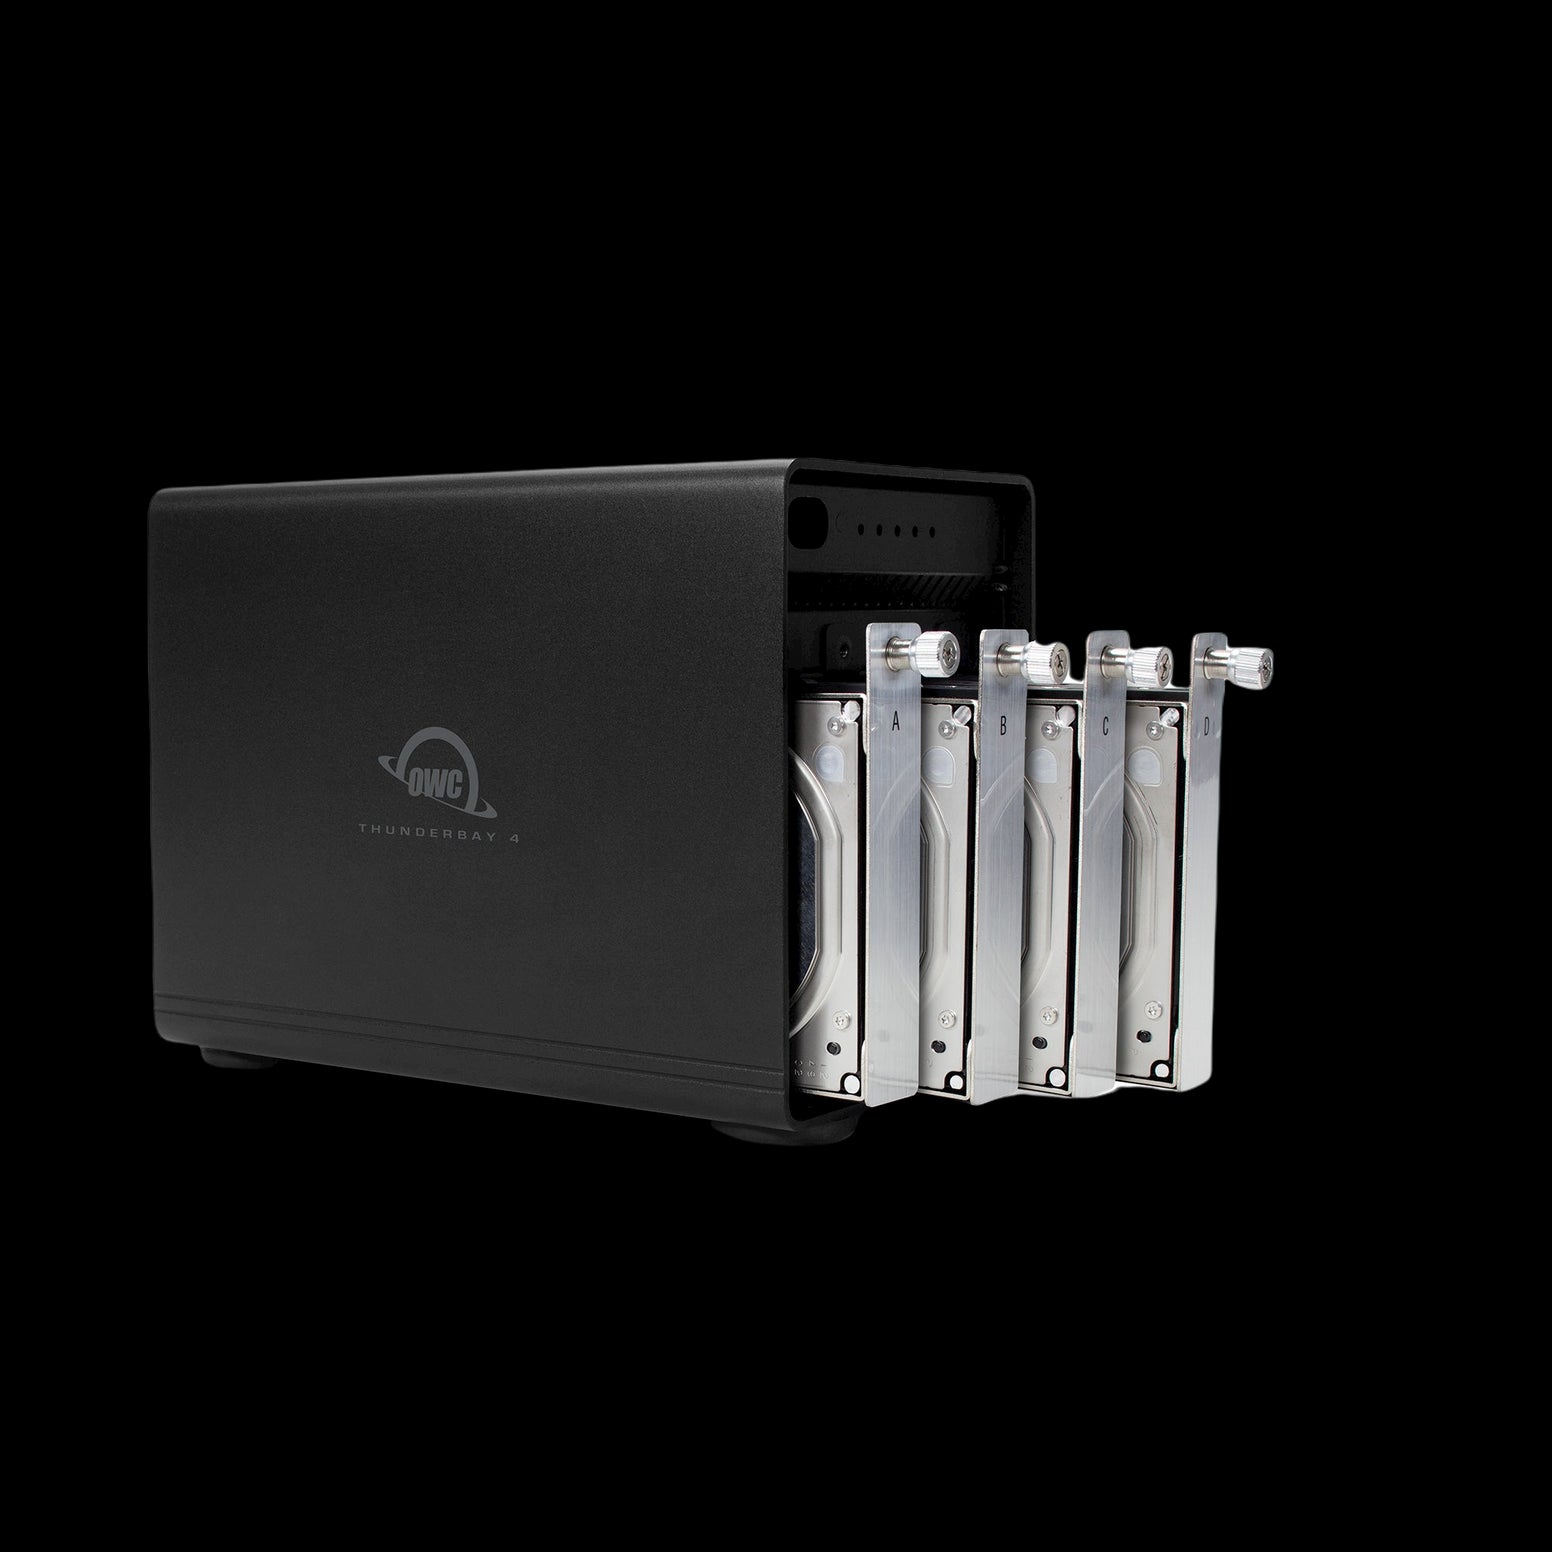 OWC ThunderBay 4 Enclosure RAID Edition (Thunderbolt 3 Model) with four 3.5" Drive Bays, Dual Thunderbolt 3 Ports and SoftRAID XT